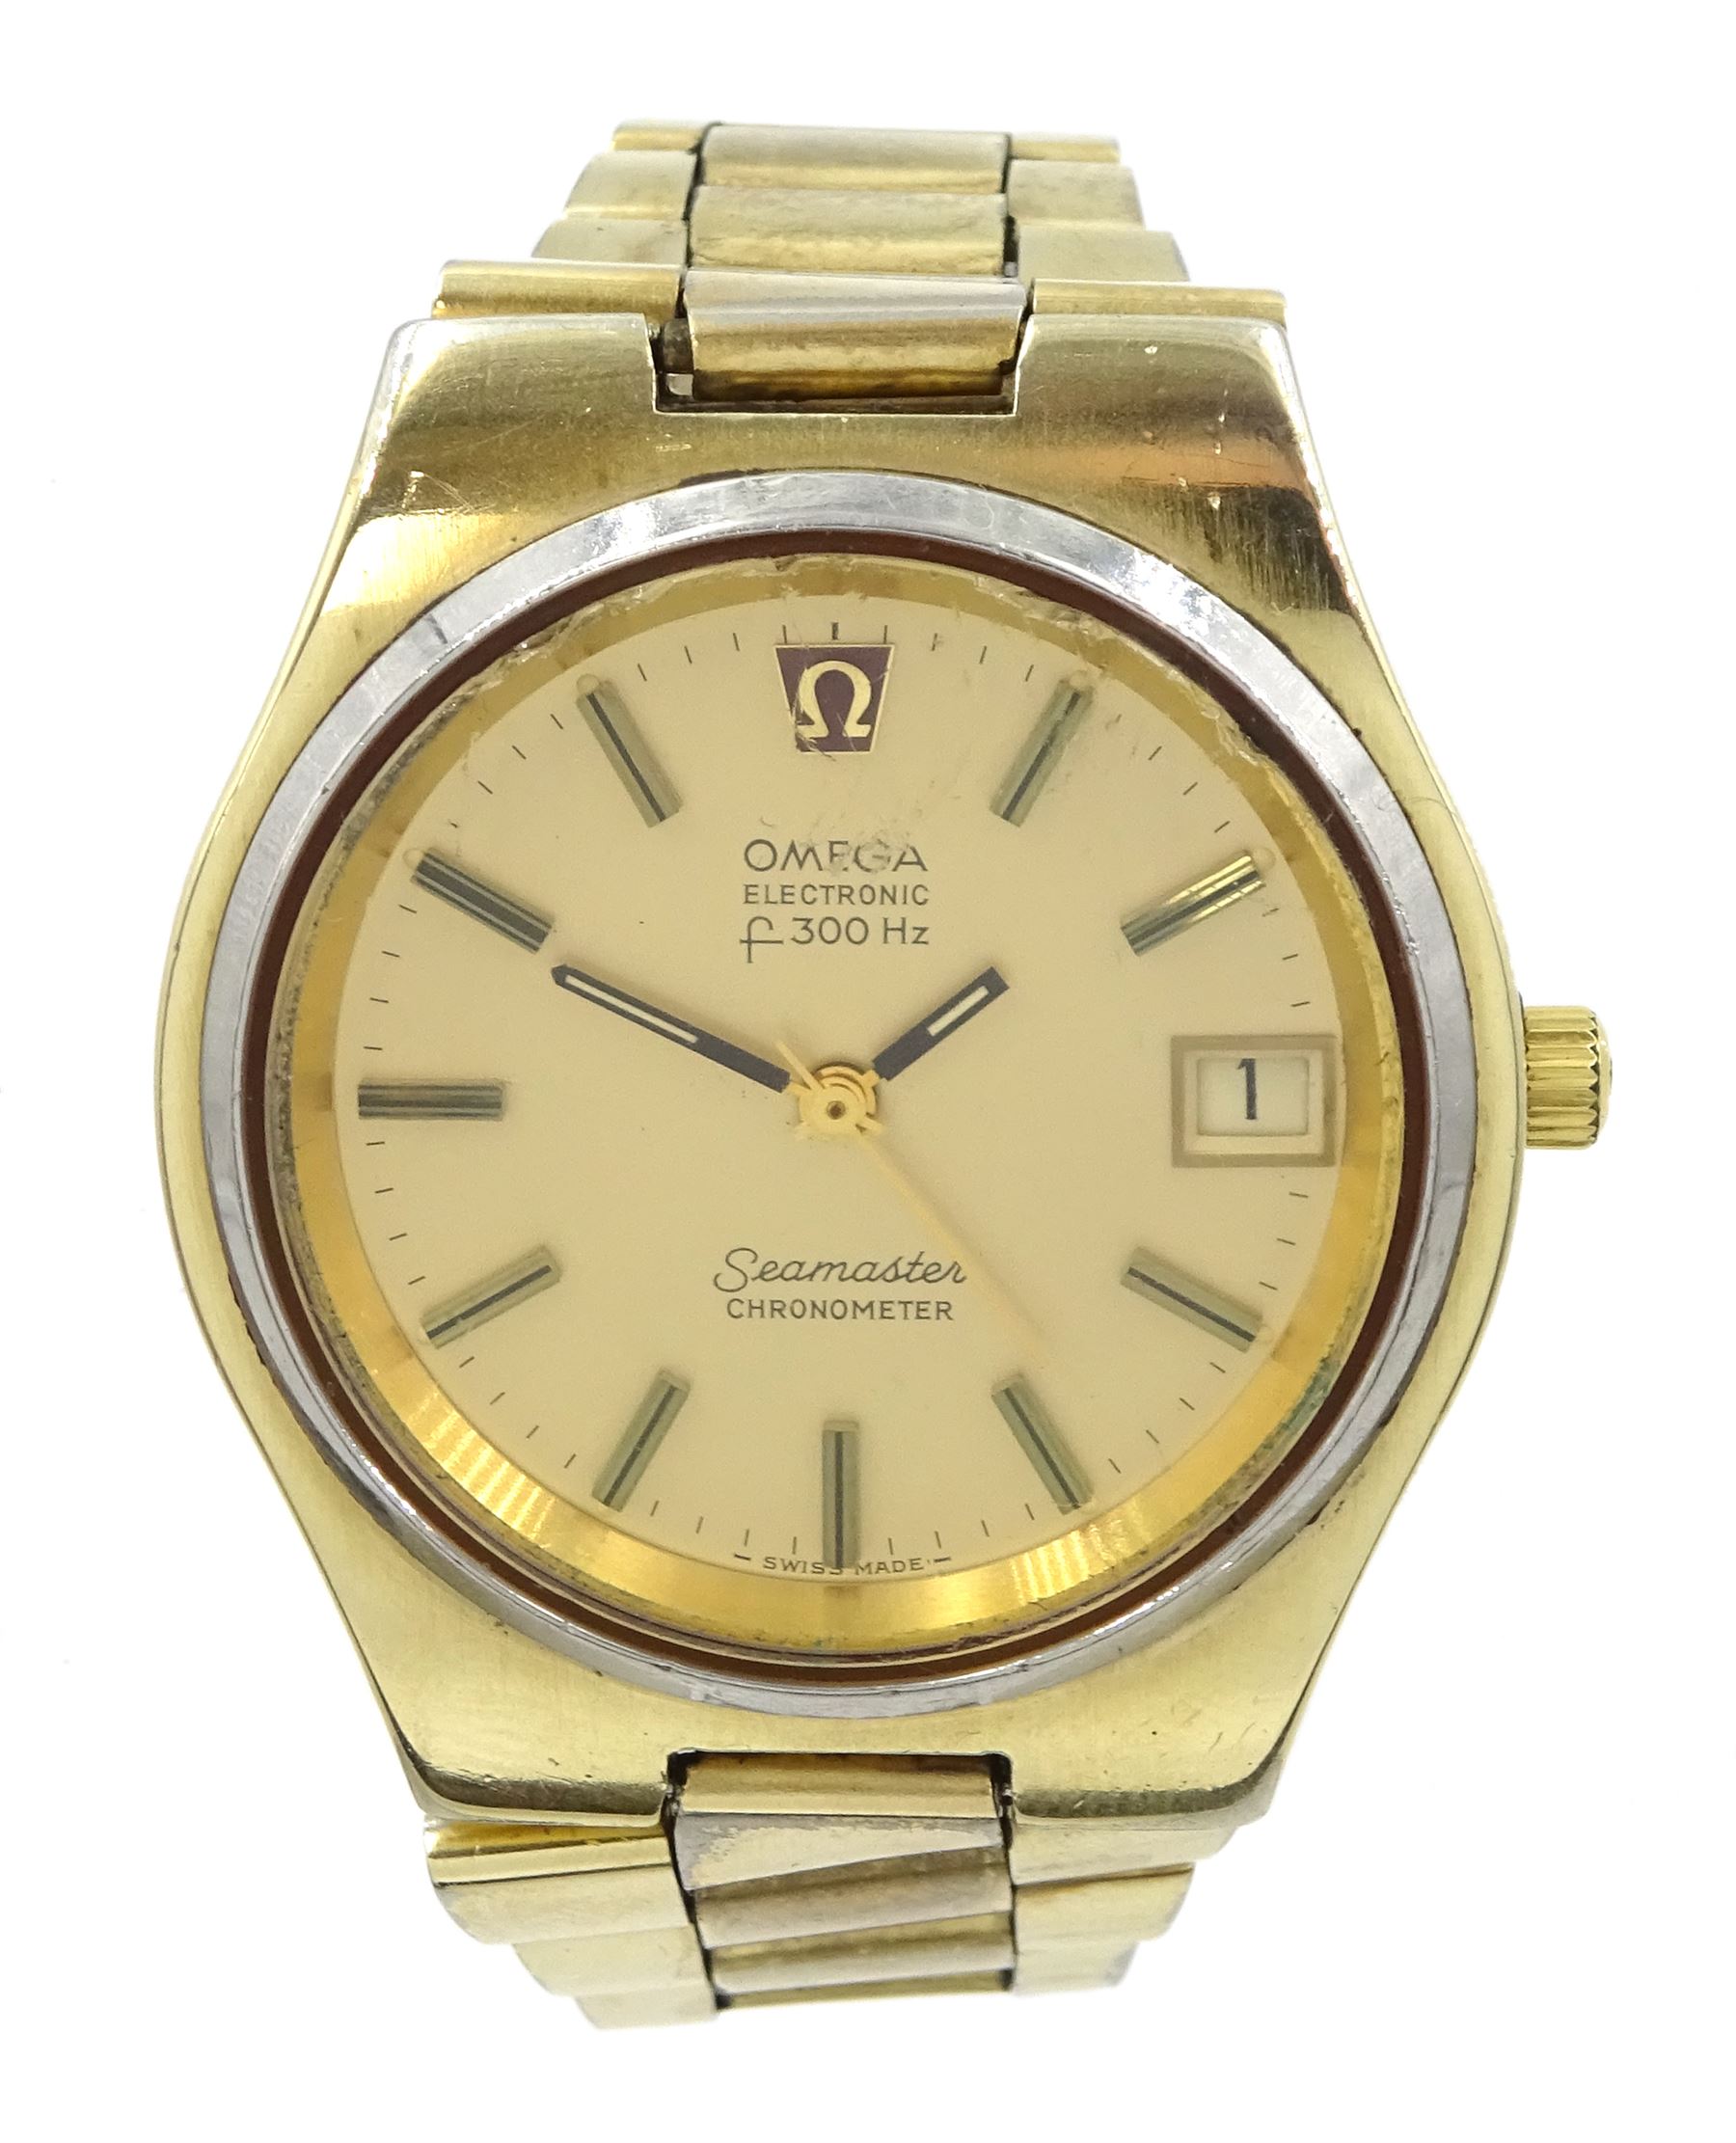 Omega Seamaster Electronic f300 Hz gentleman's gold-plated quartz wristwatch